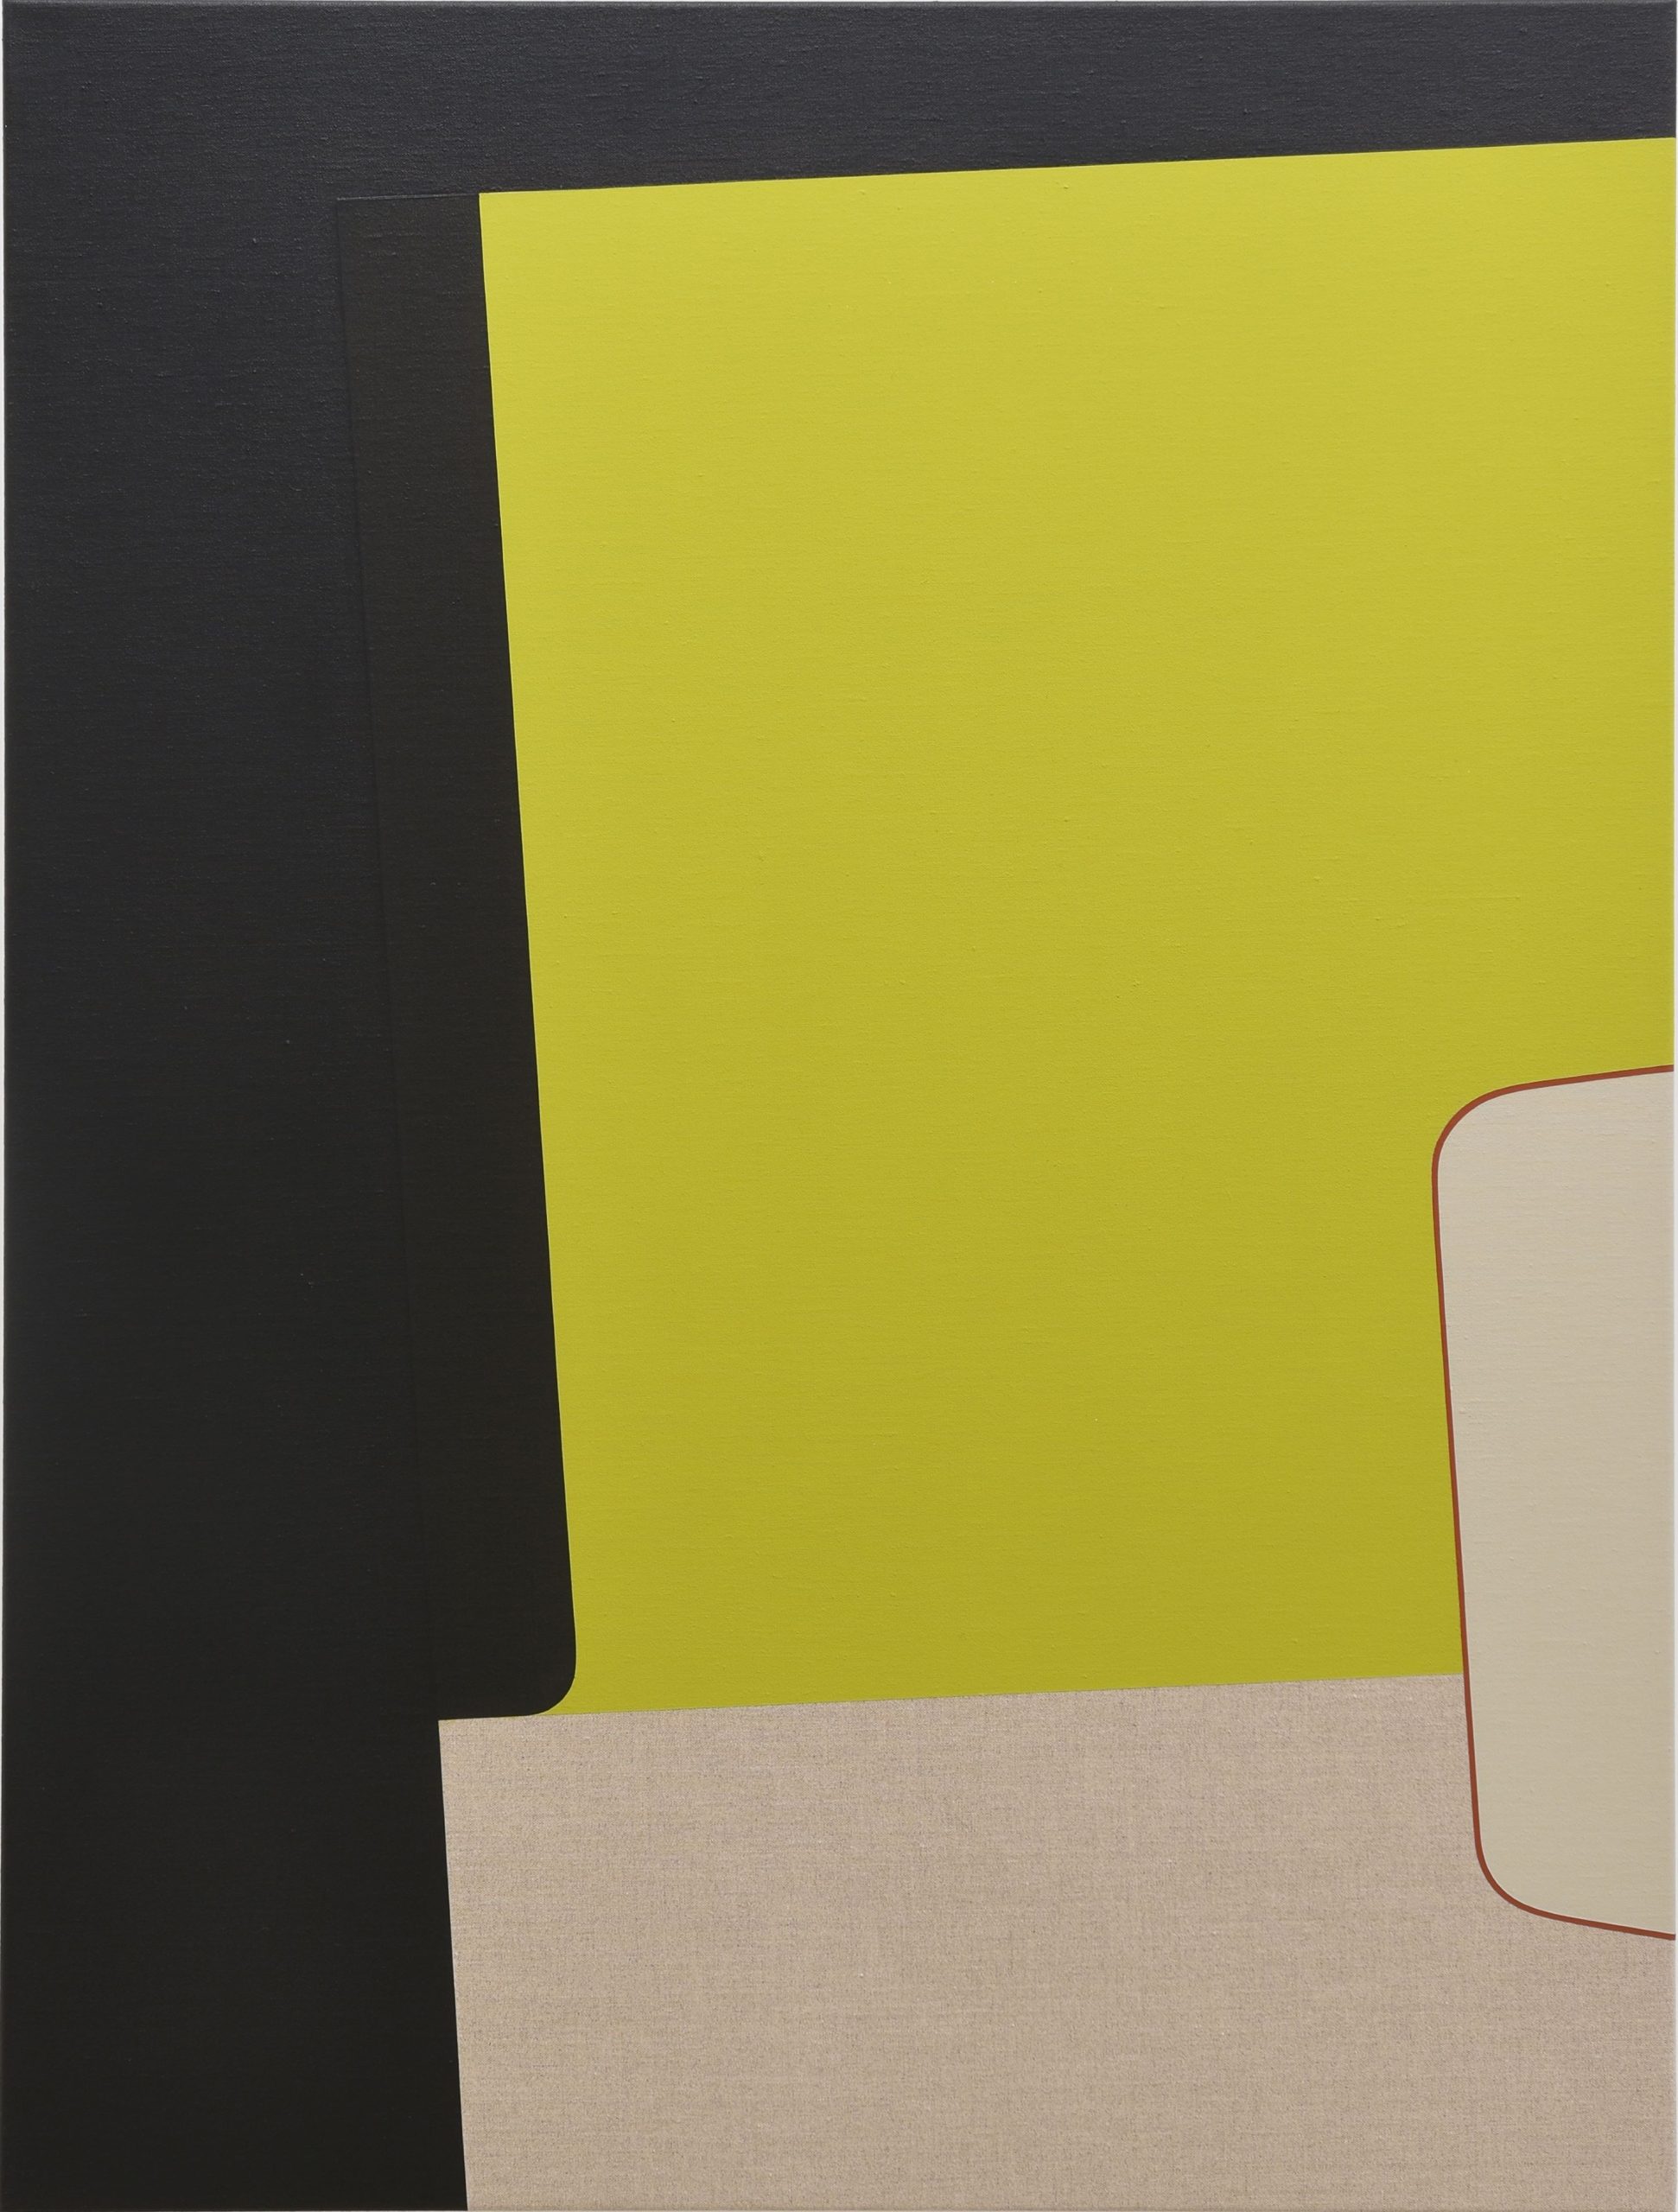 Matthew Browne 'Fo-Fhas' vinyl tempera and oil on linen 107 x 81cm $10,500